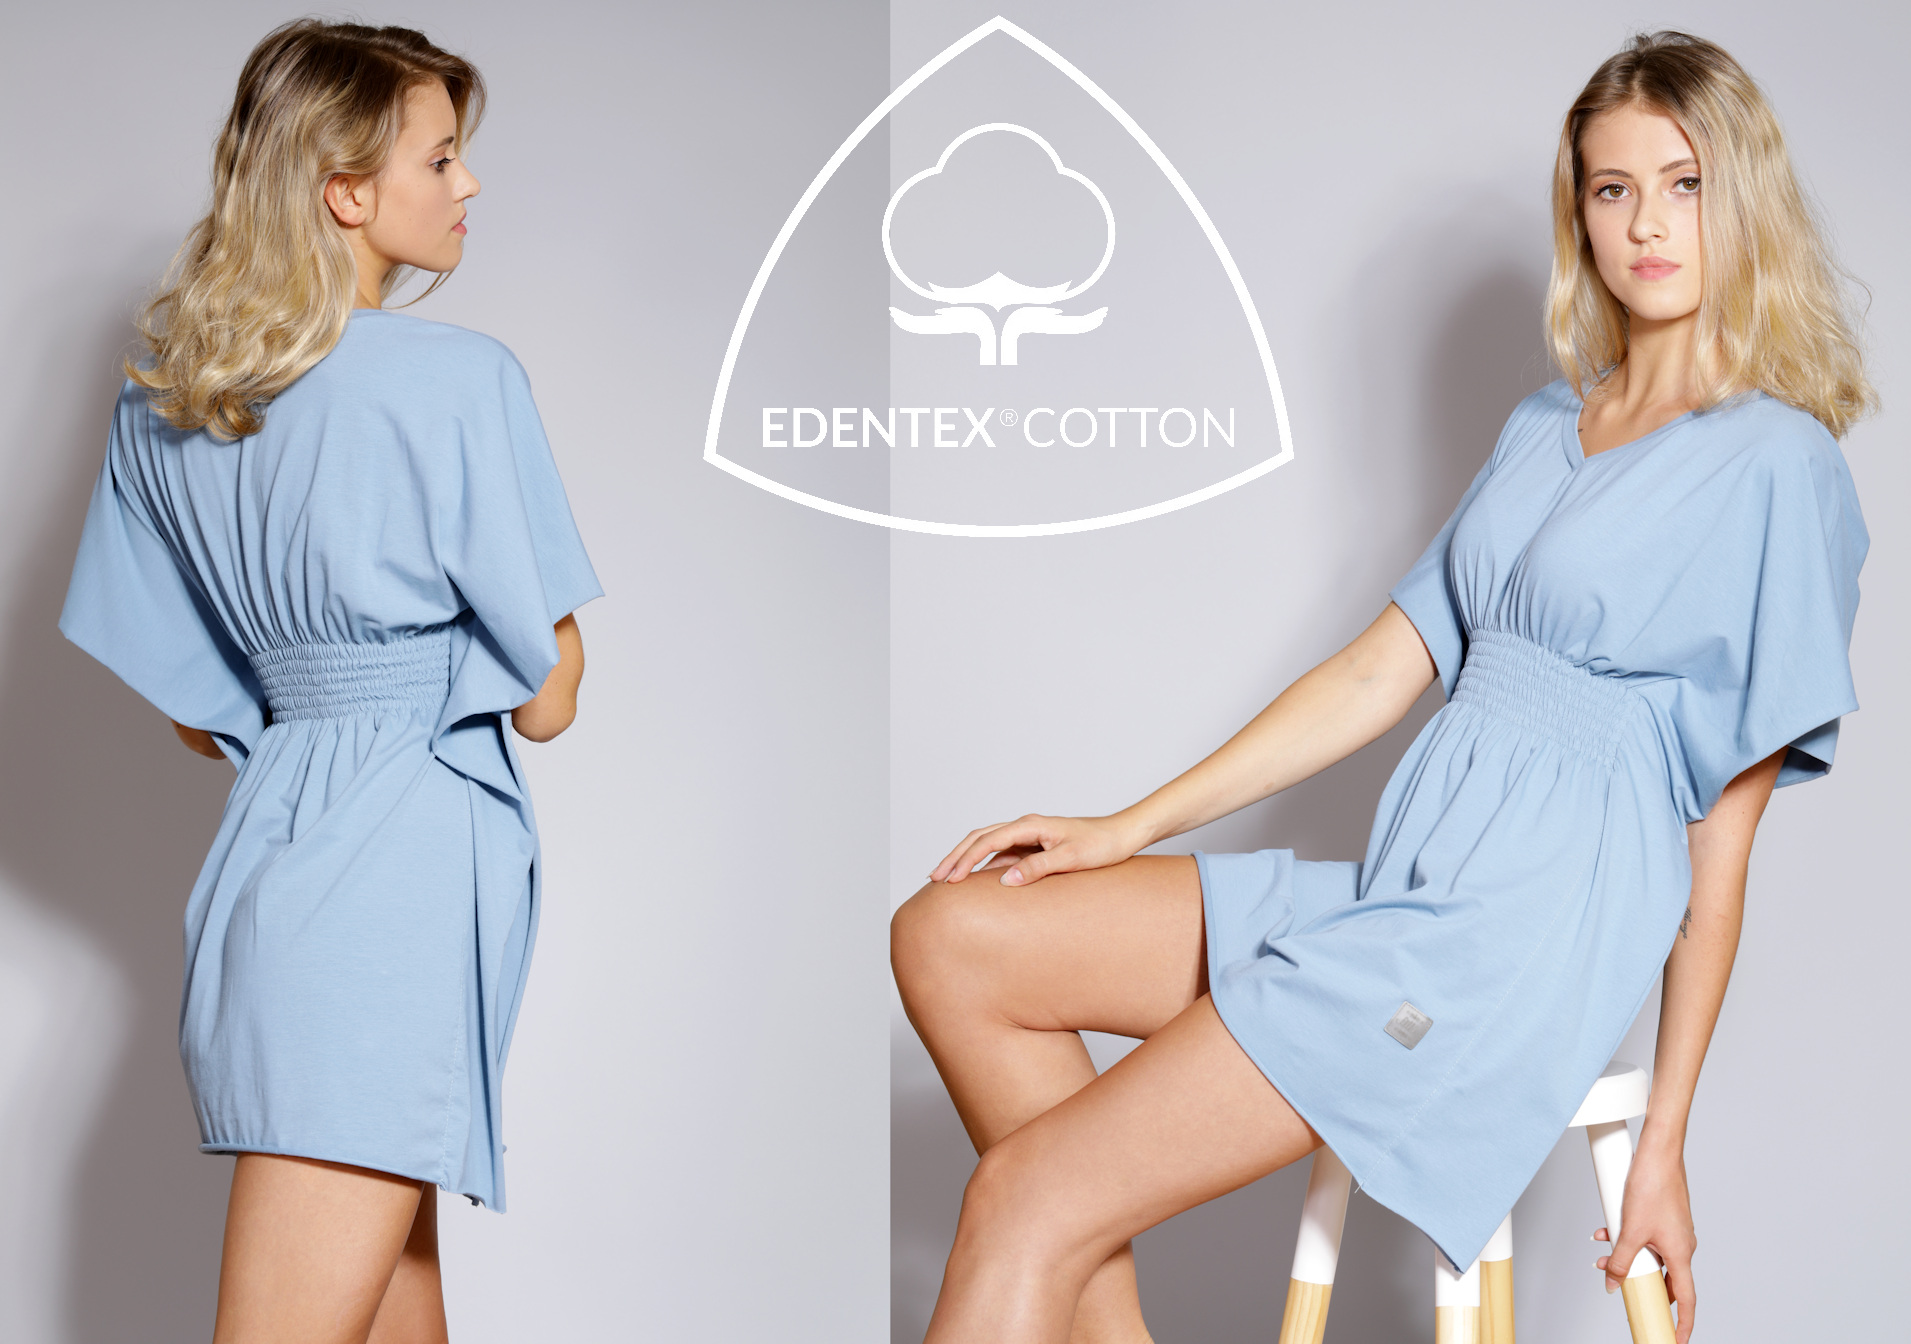 EDENTEX®COTTON: Amazing comfort of wearing